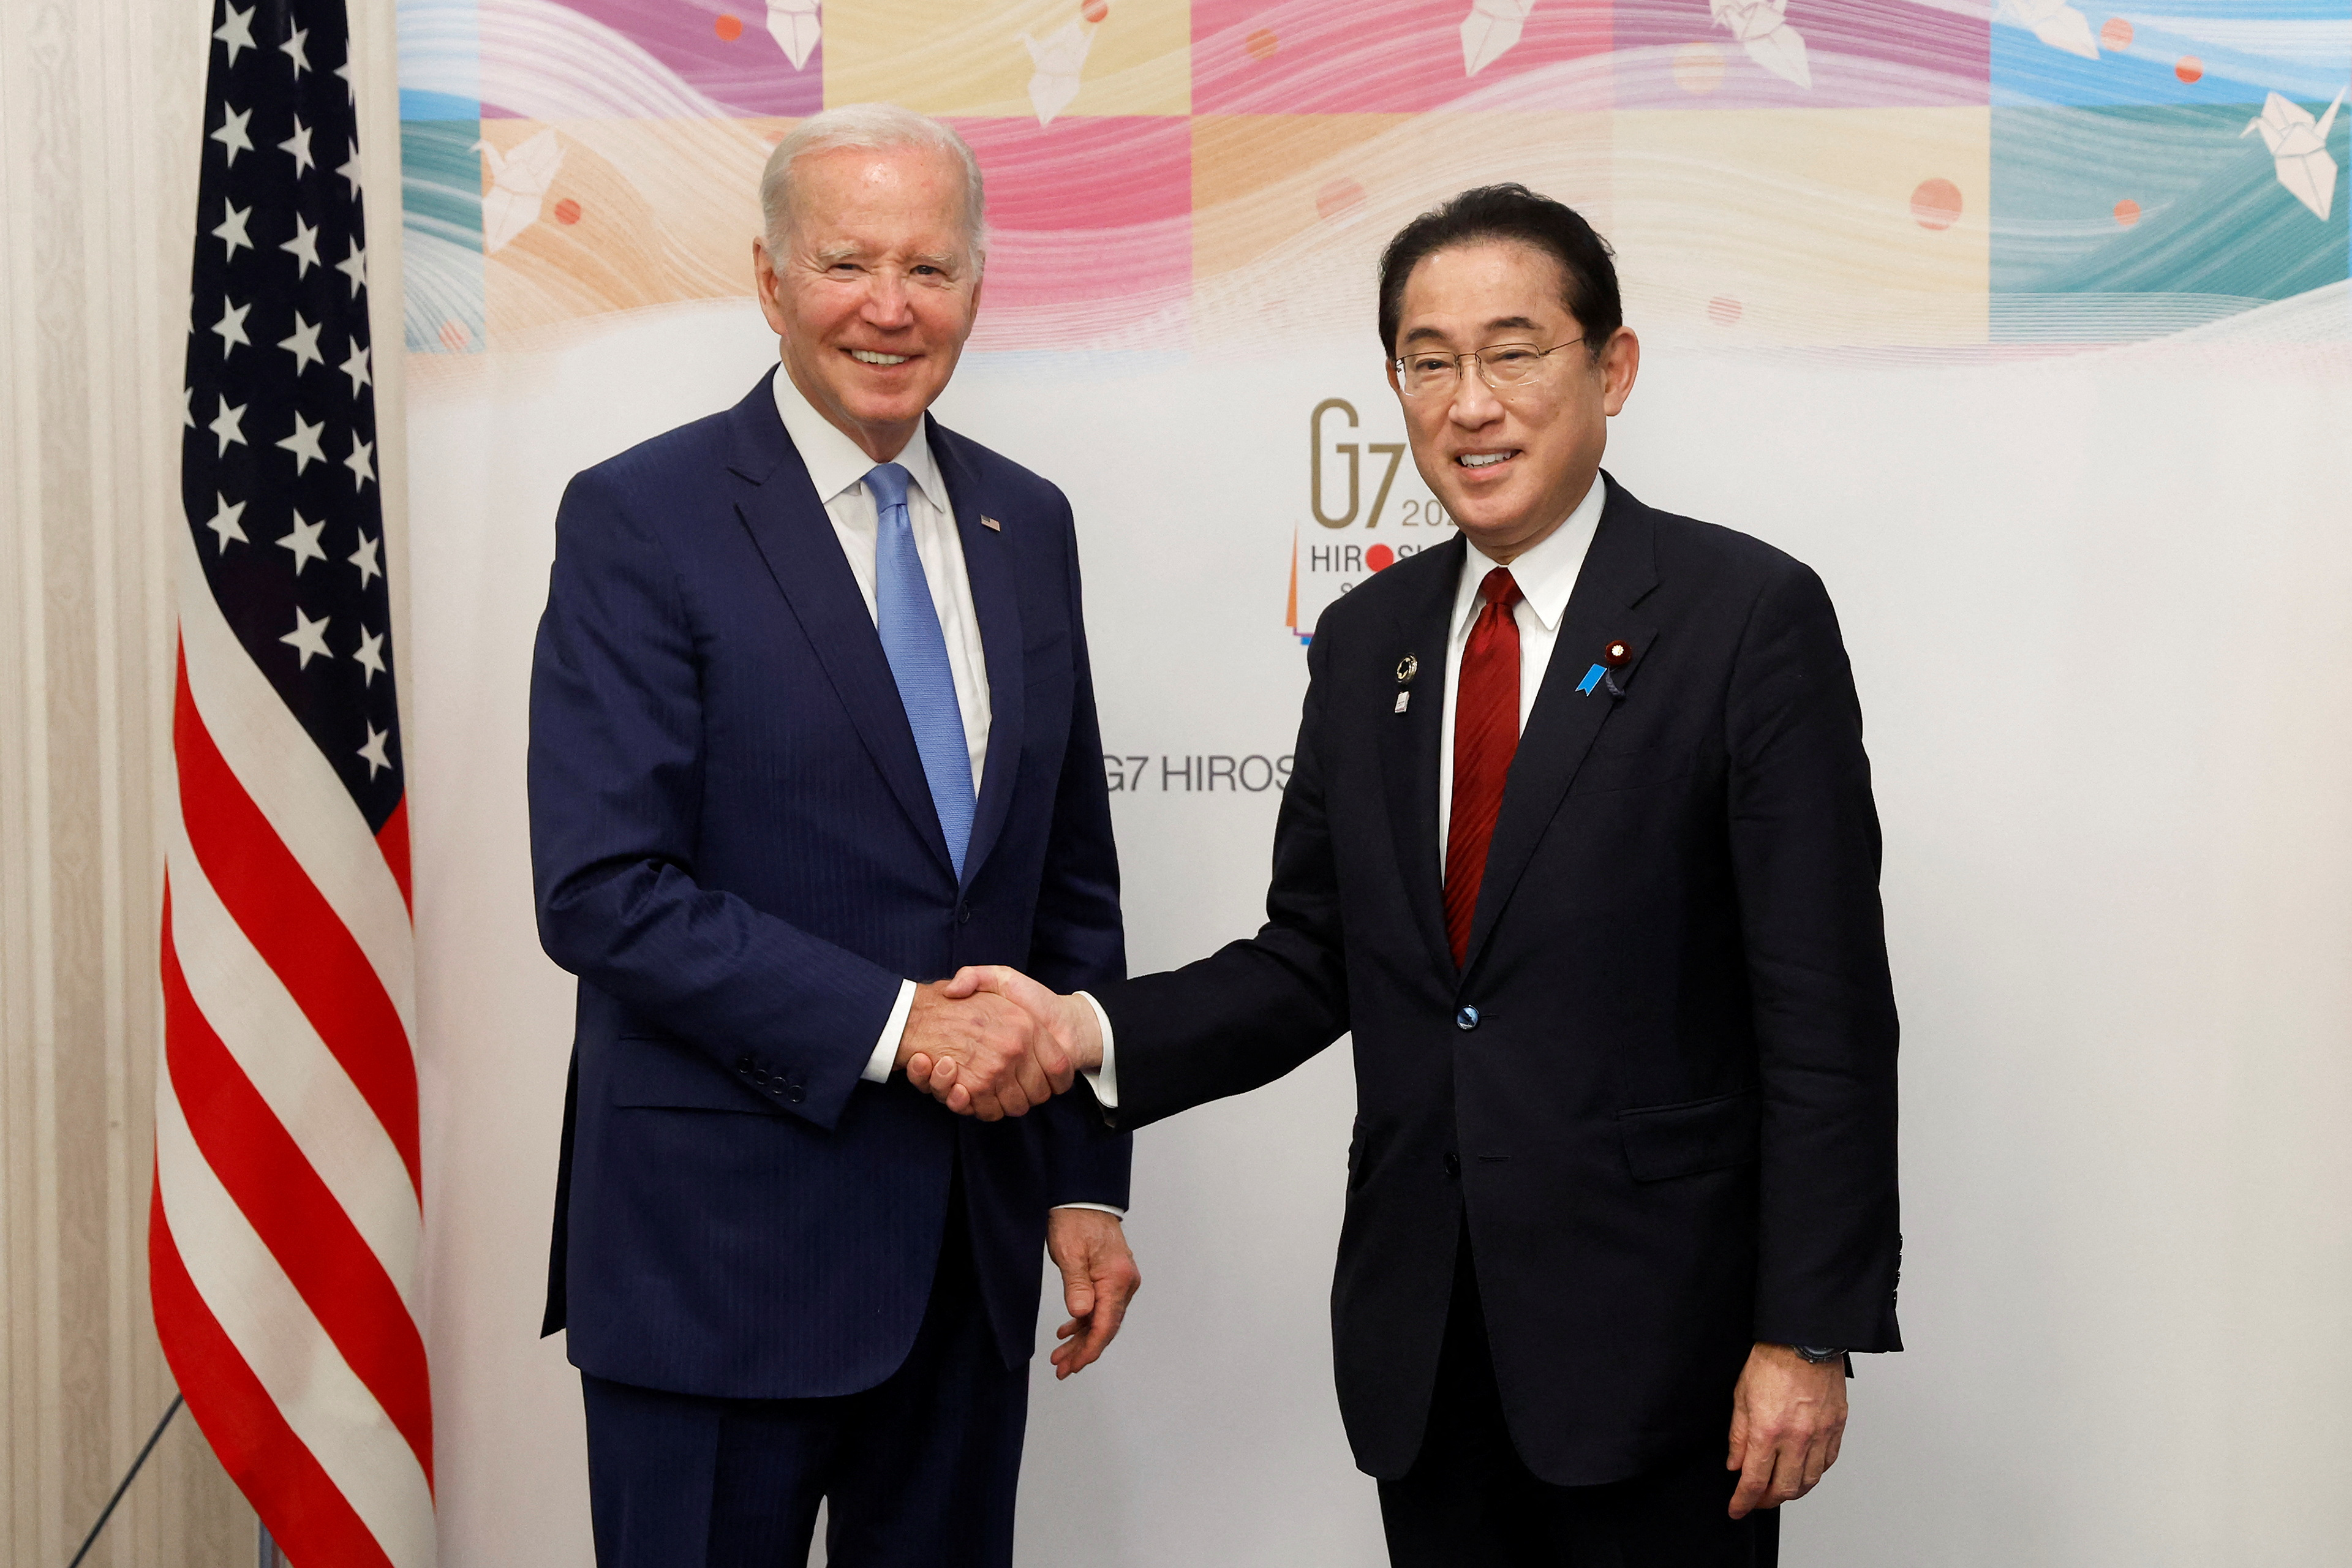 G7 leaders summit in Hiroshima